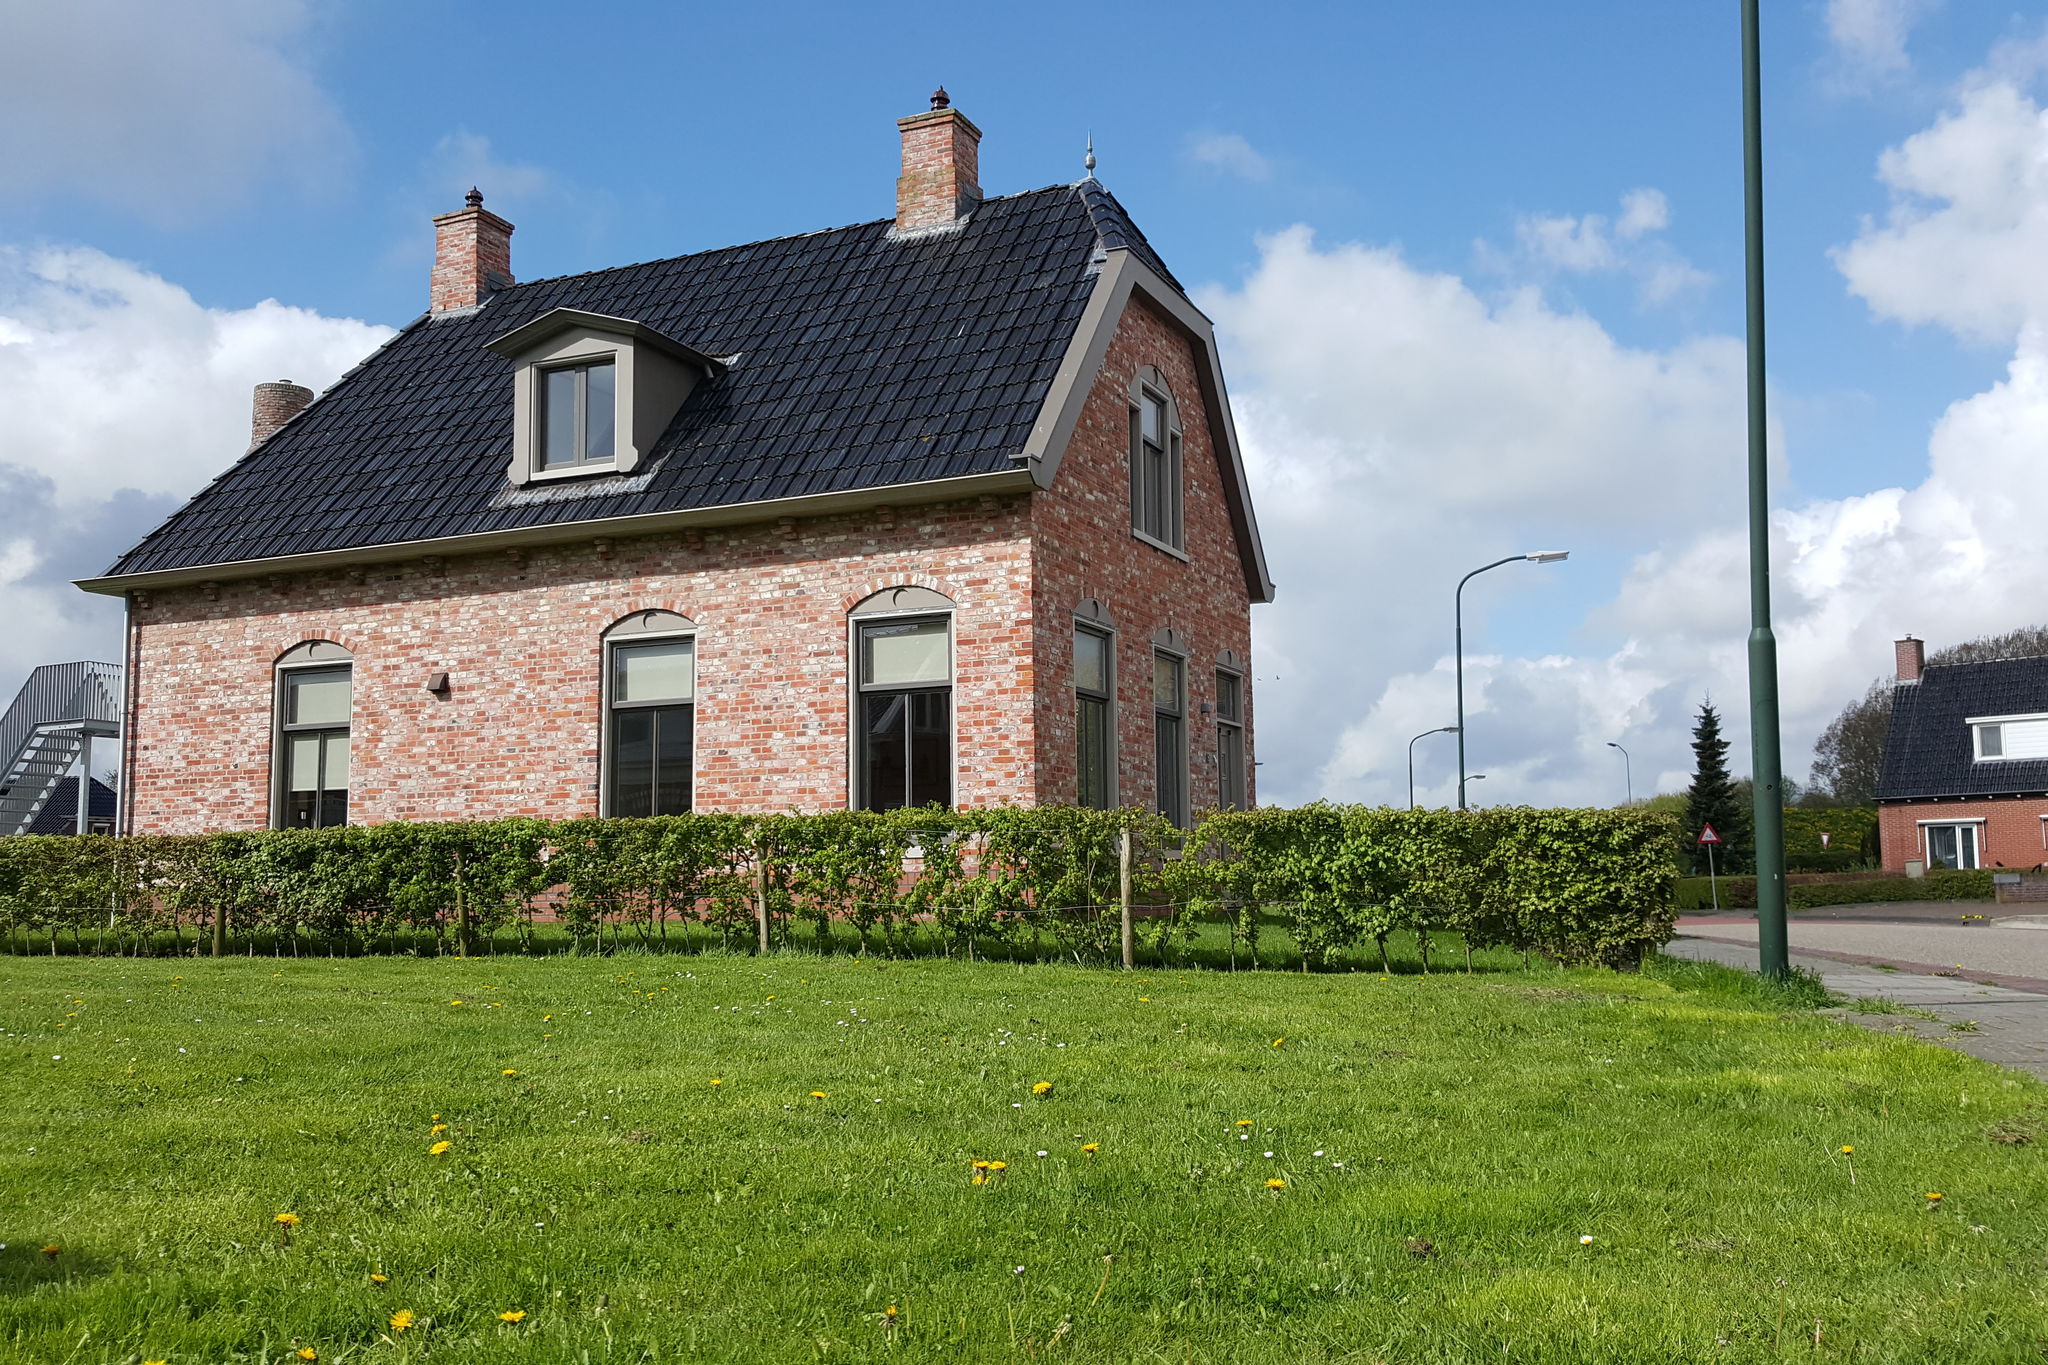 Fisherman's house near the Lauwersmeer